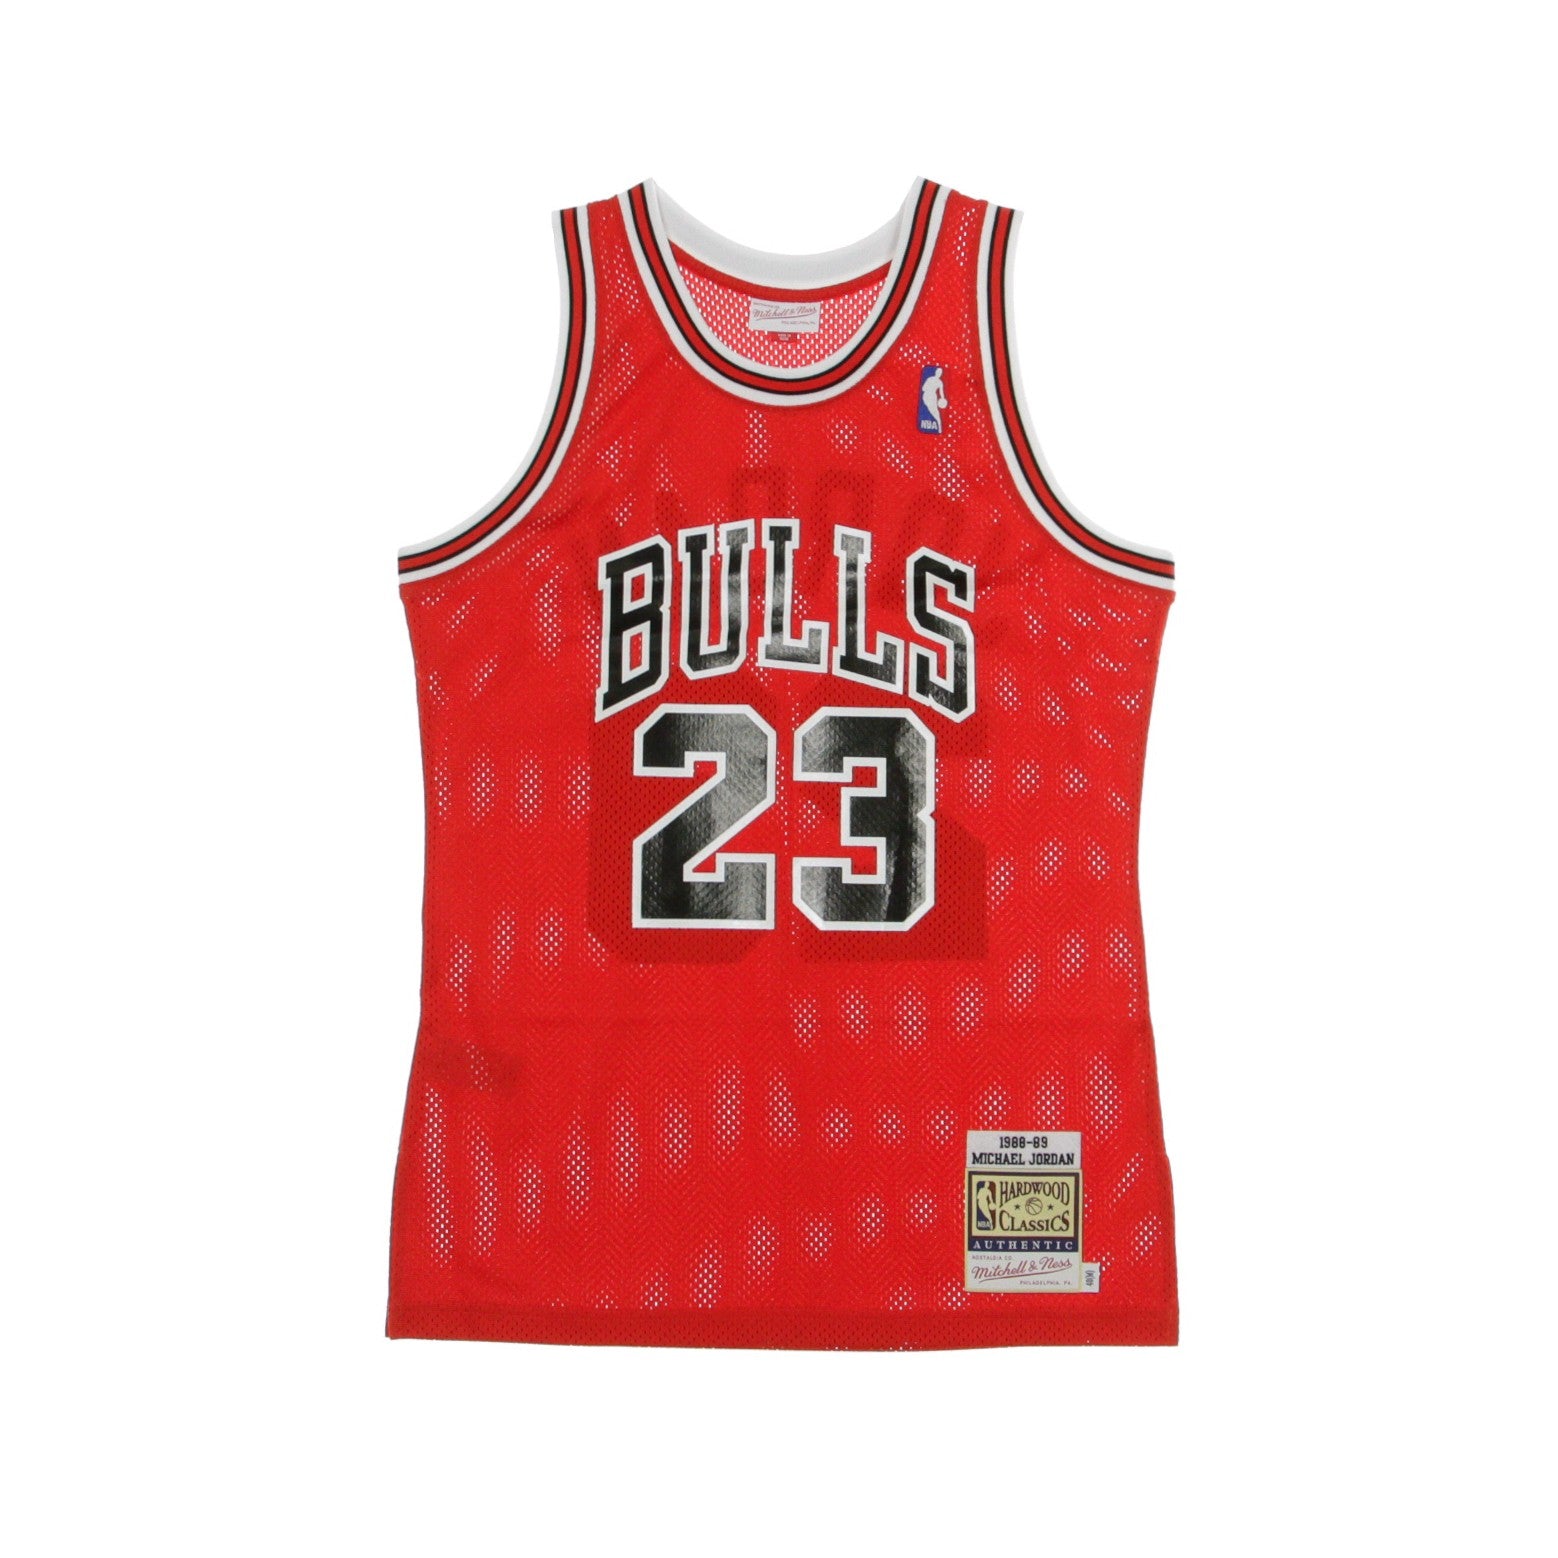 Mitchell & Ness, Canotta Basket Uomo Nba Authentic Jersey Michael Jordan No.23 1988-89 Chibul Road, Original Team Colors